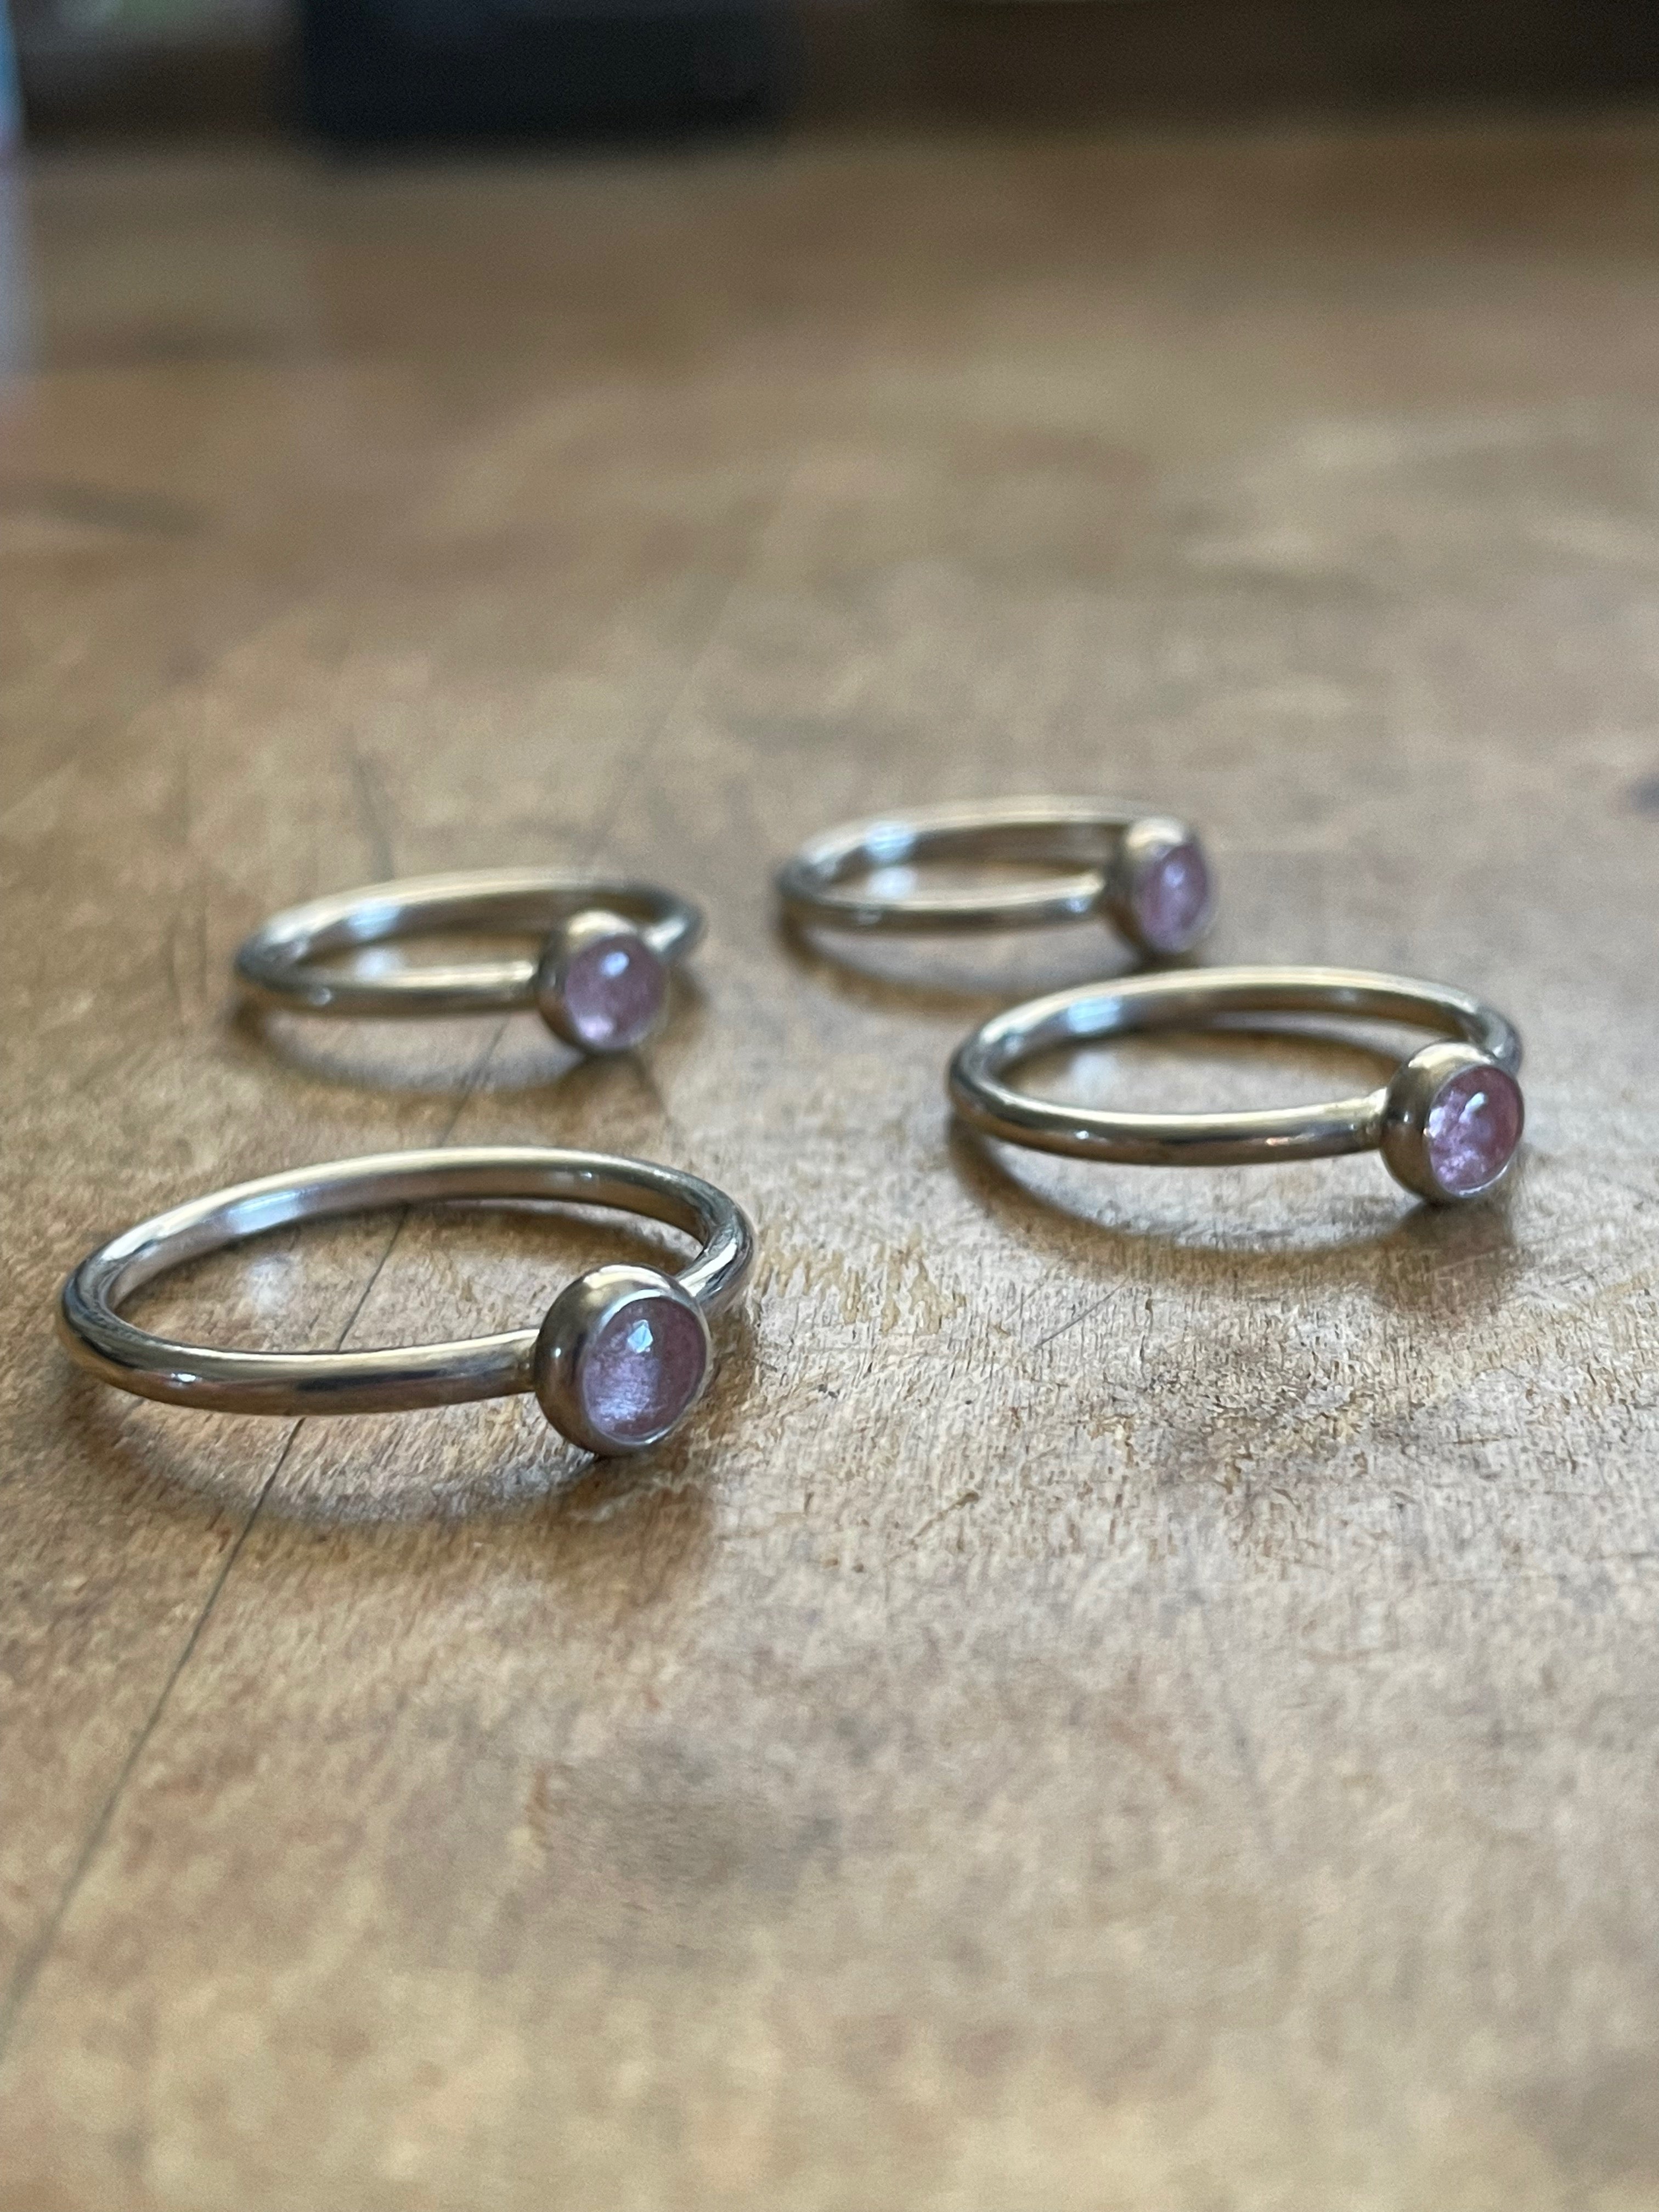 Handmade gem rings by MattyRo.com